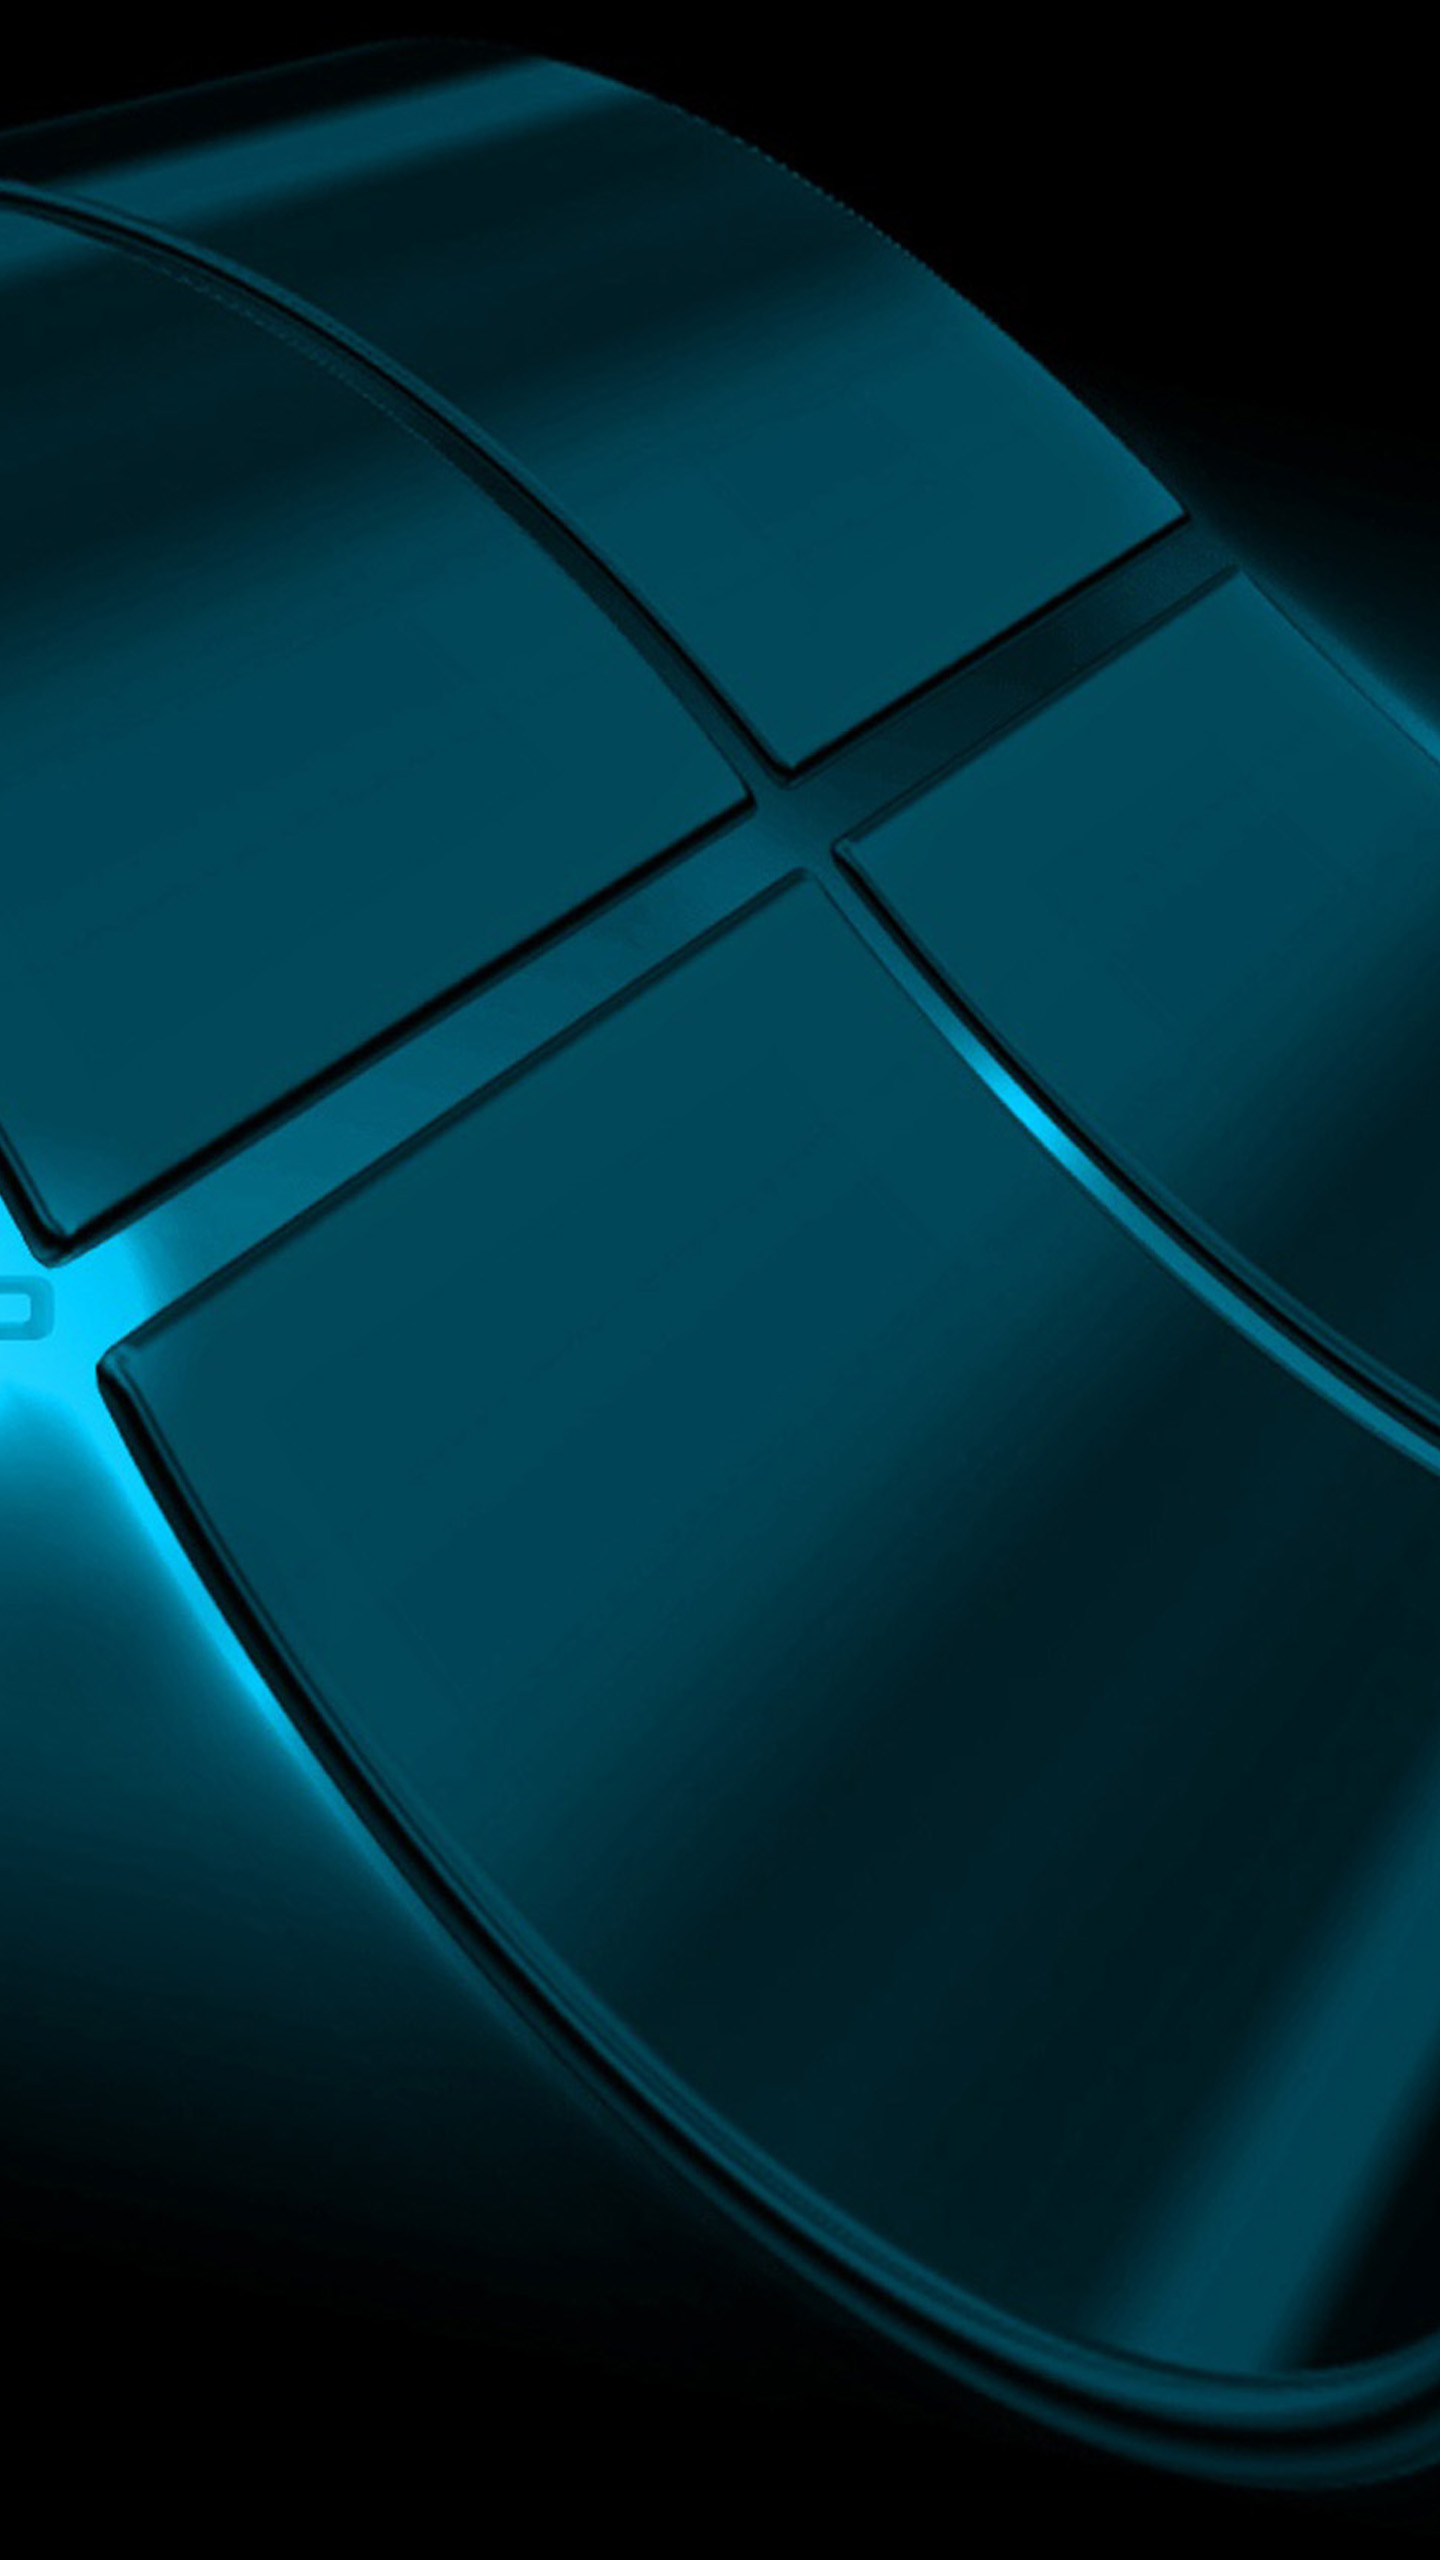 Windows Xp Blue Illusion Galaxy S6 Wallpaper